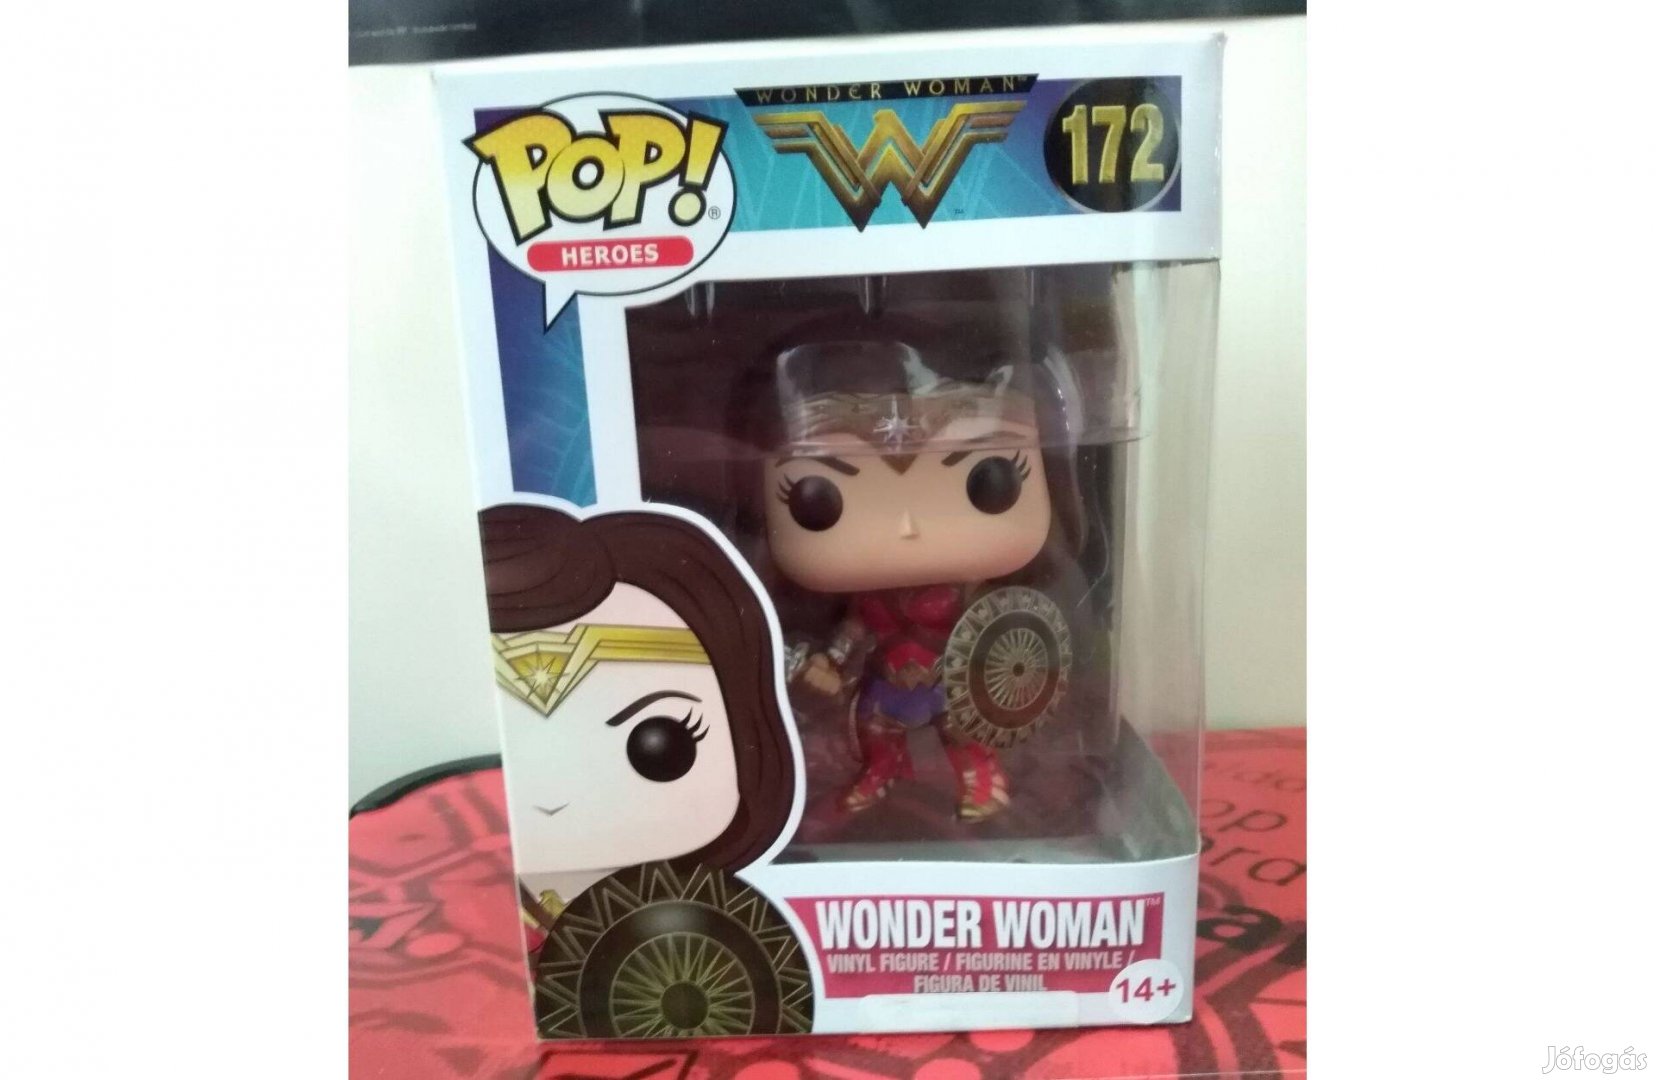 Funko Pop! Marvel Igazság Ligája Wonder Woman 172 vaulted ritka figura